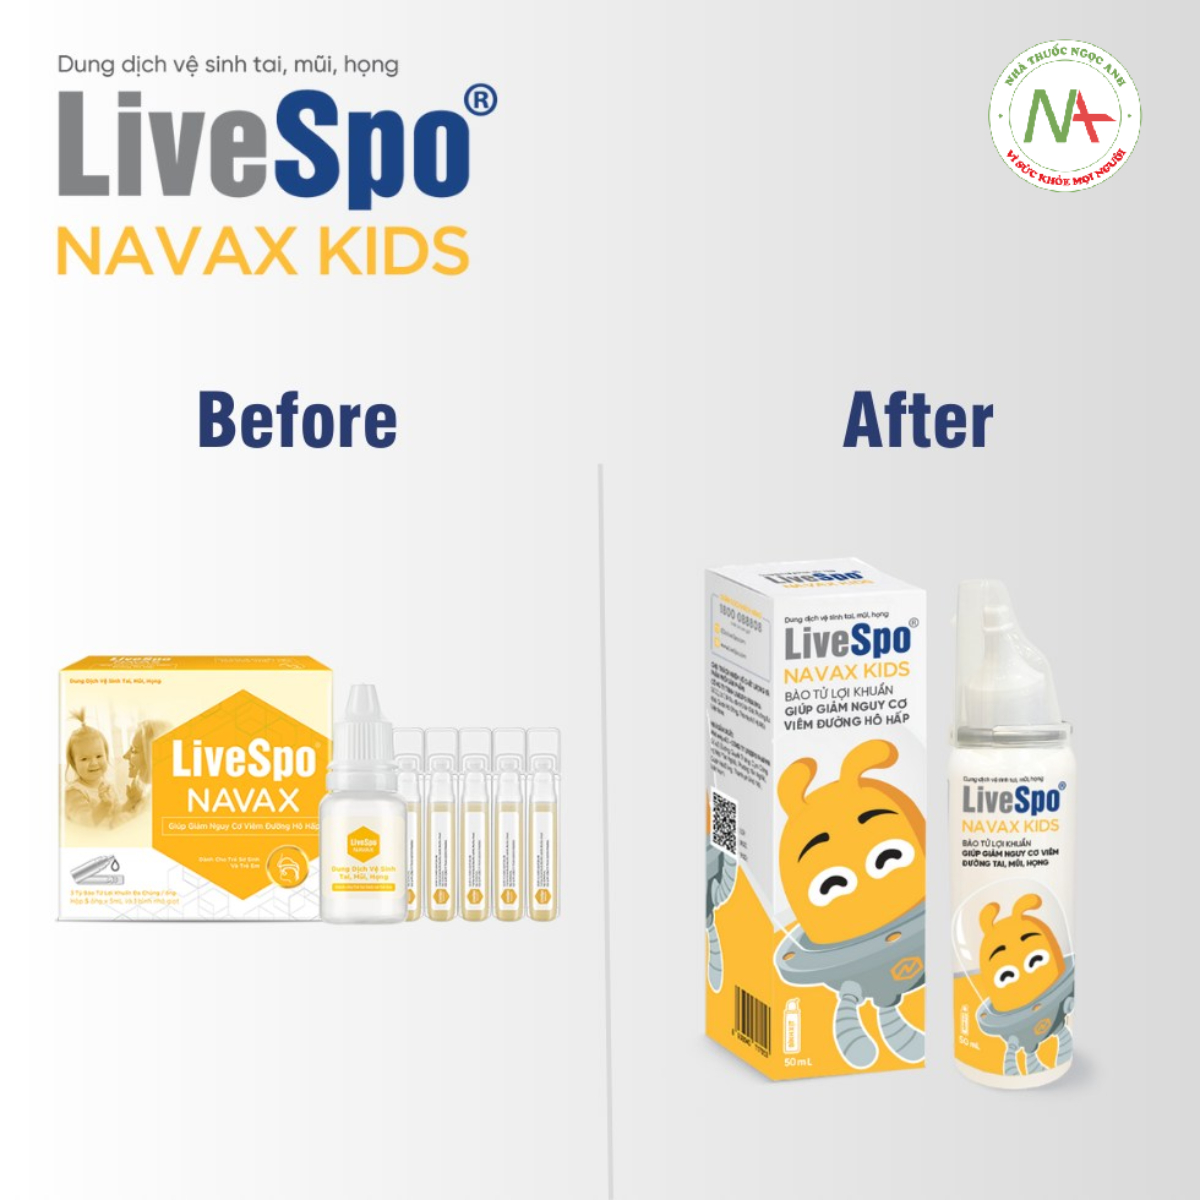 LiveSpo Navax Kids